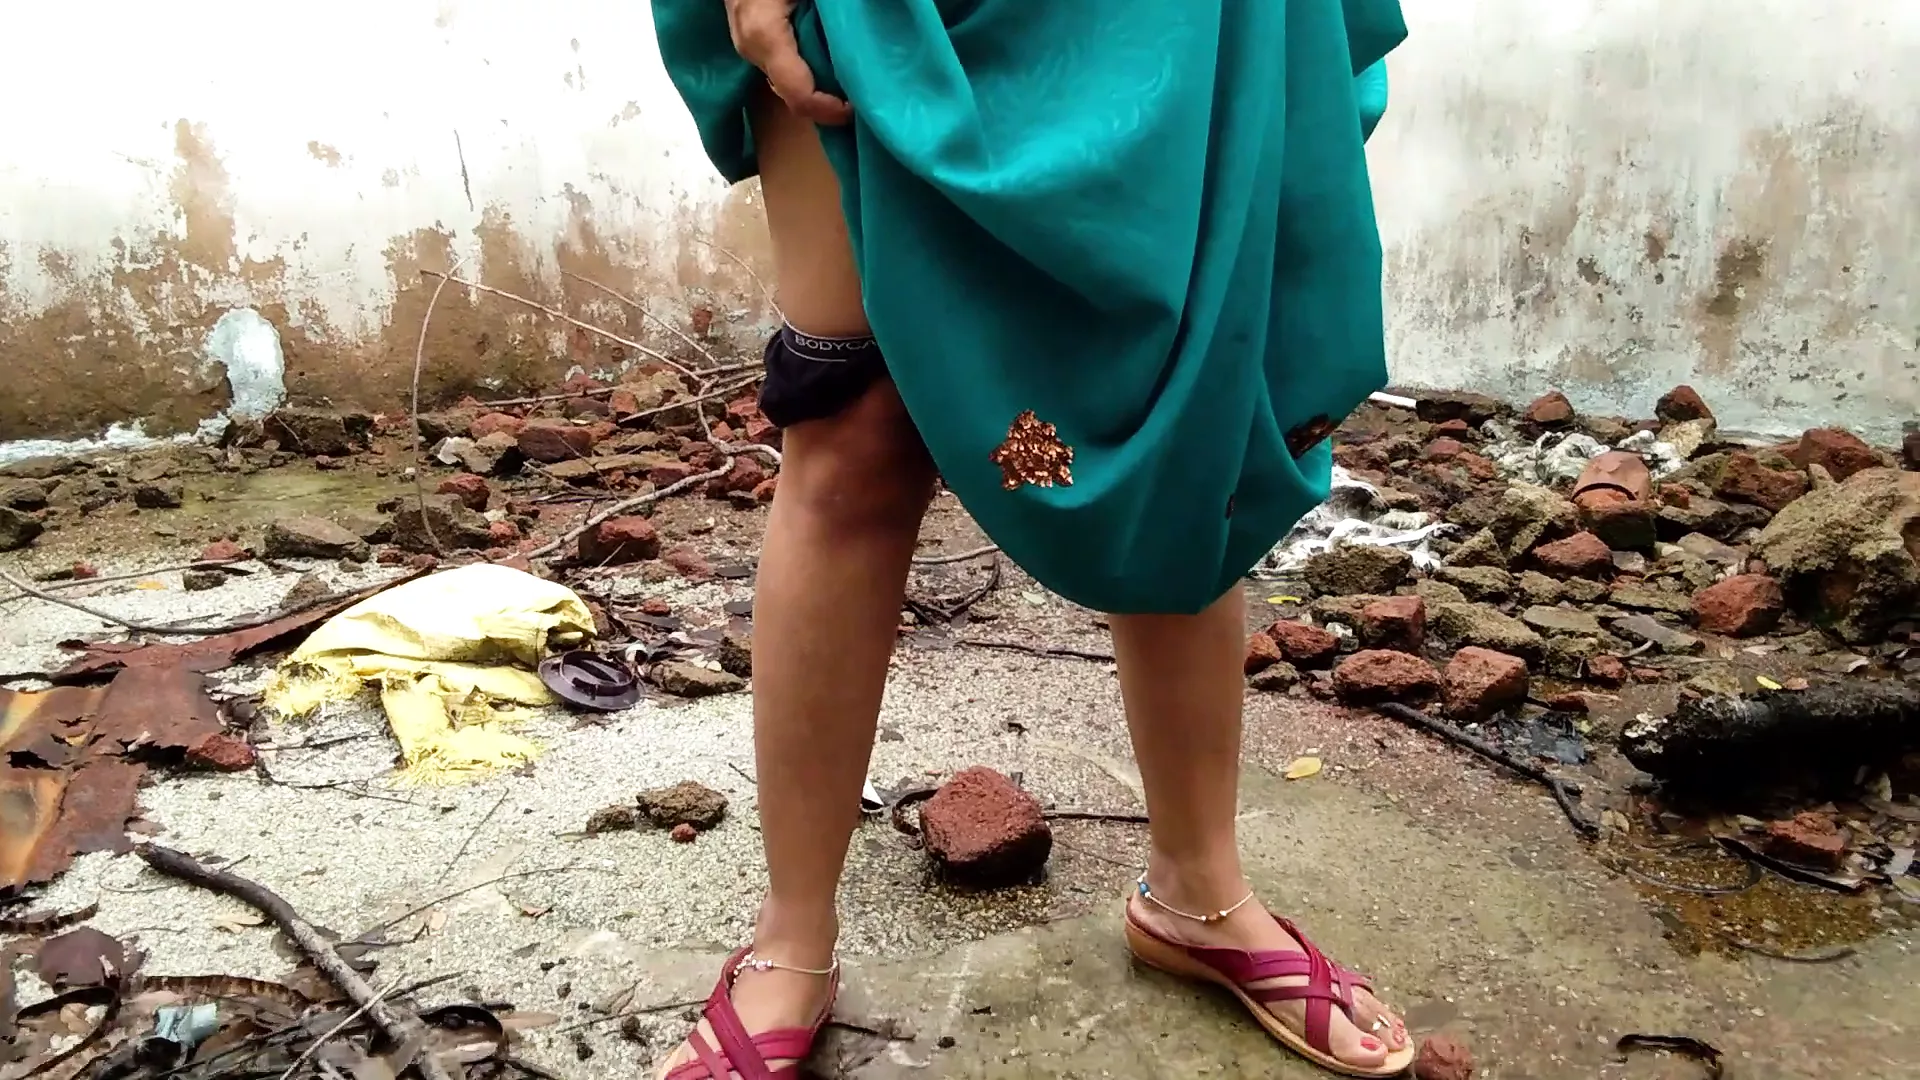 Village Girl Pee Out Door Pron - Desi Indian Aunt Outdoor Public Pissing Video Compilation | xHamster